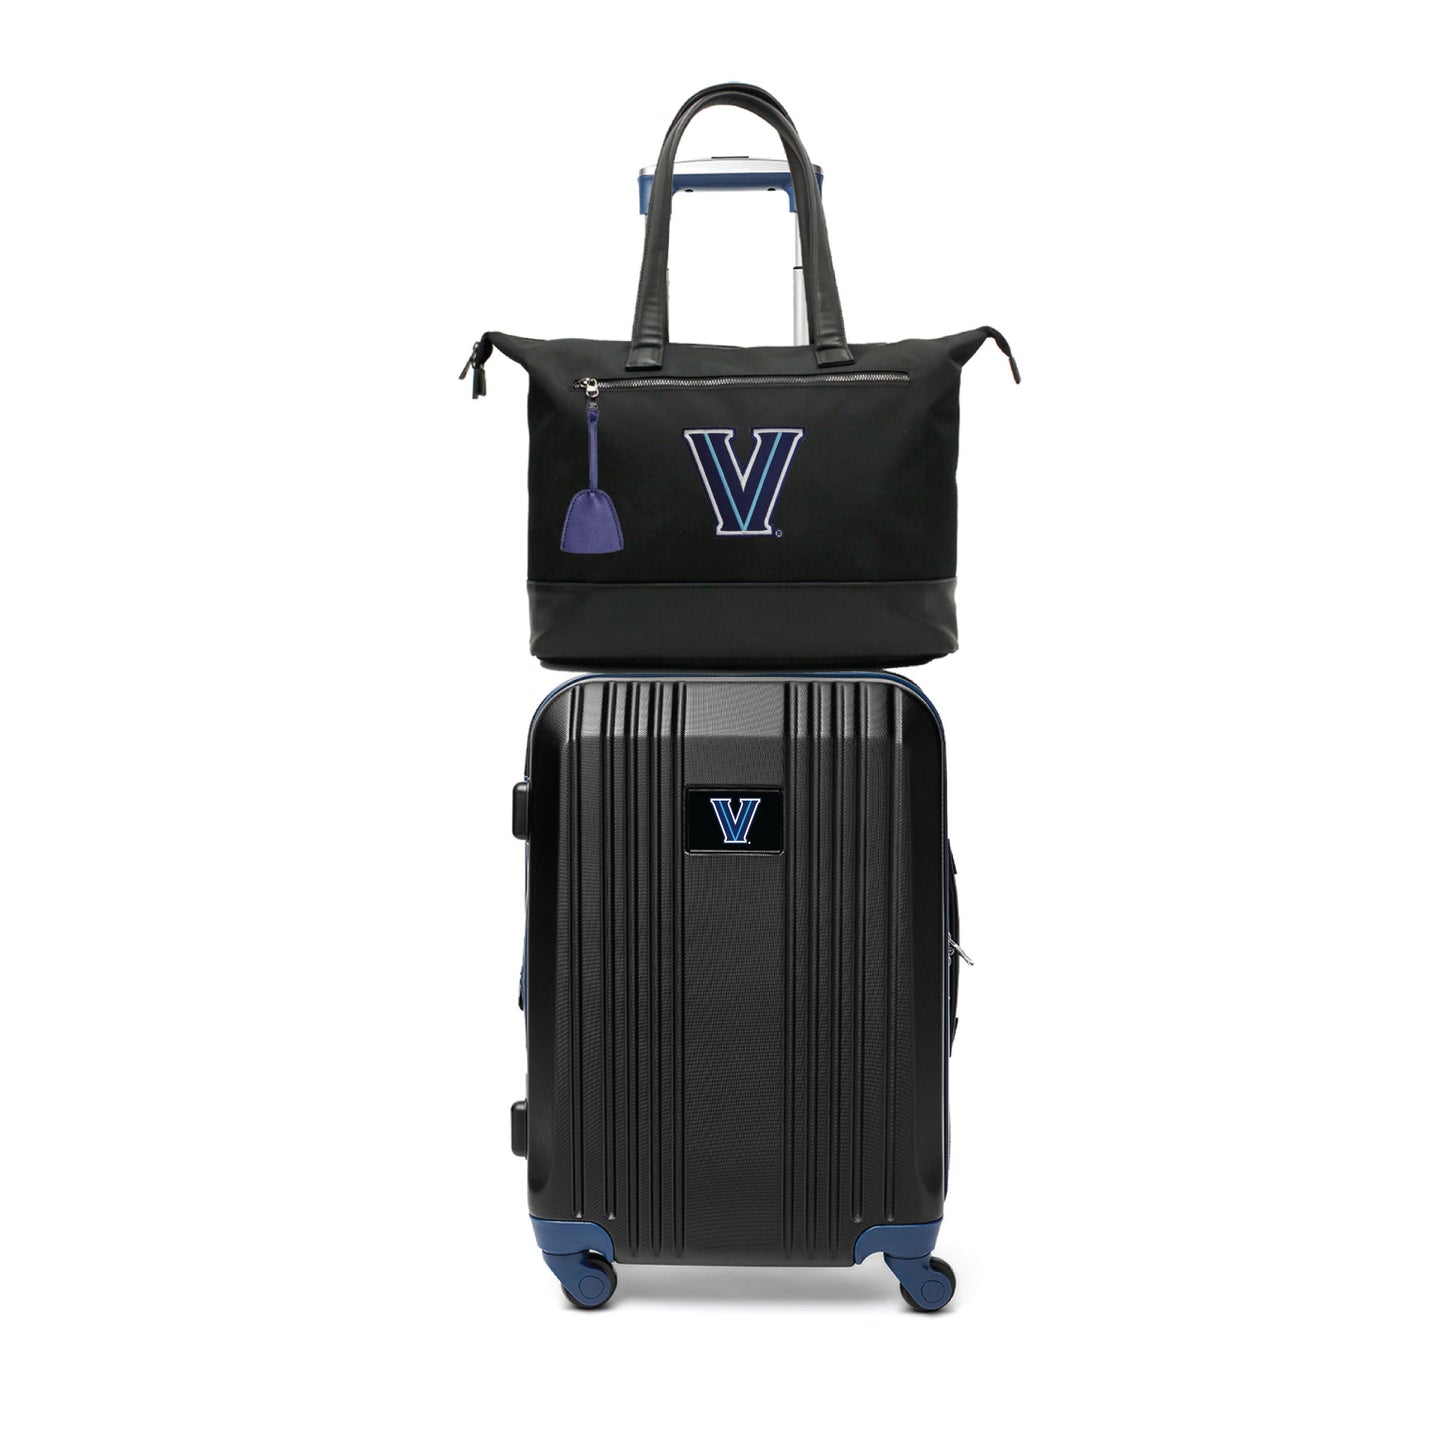 Villanova Wildcats Premium Laptop Tote Bag and Luggage Set